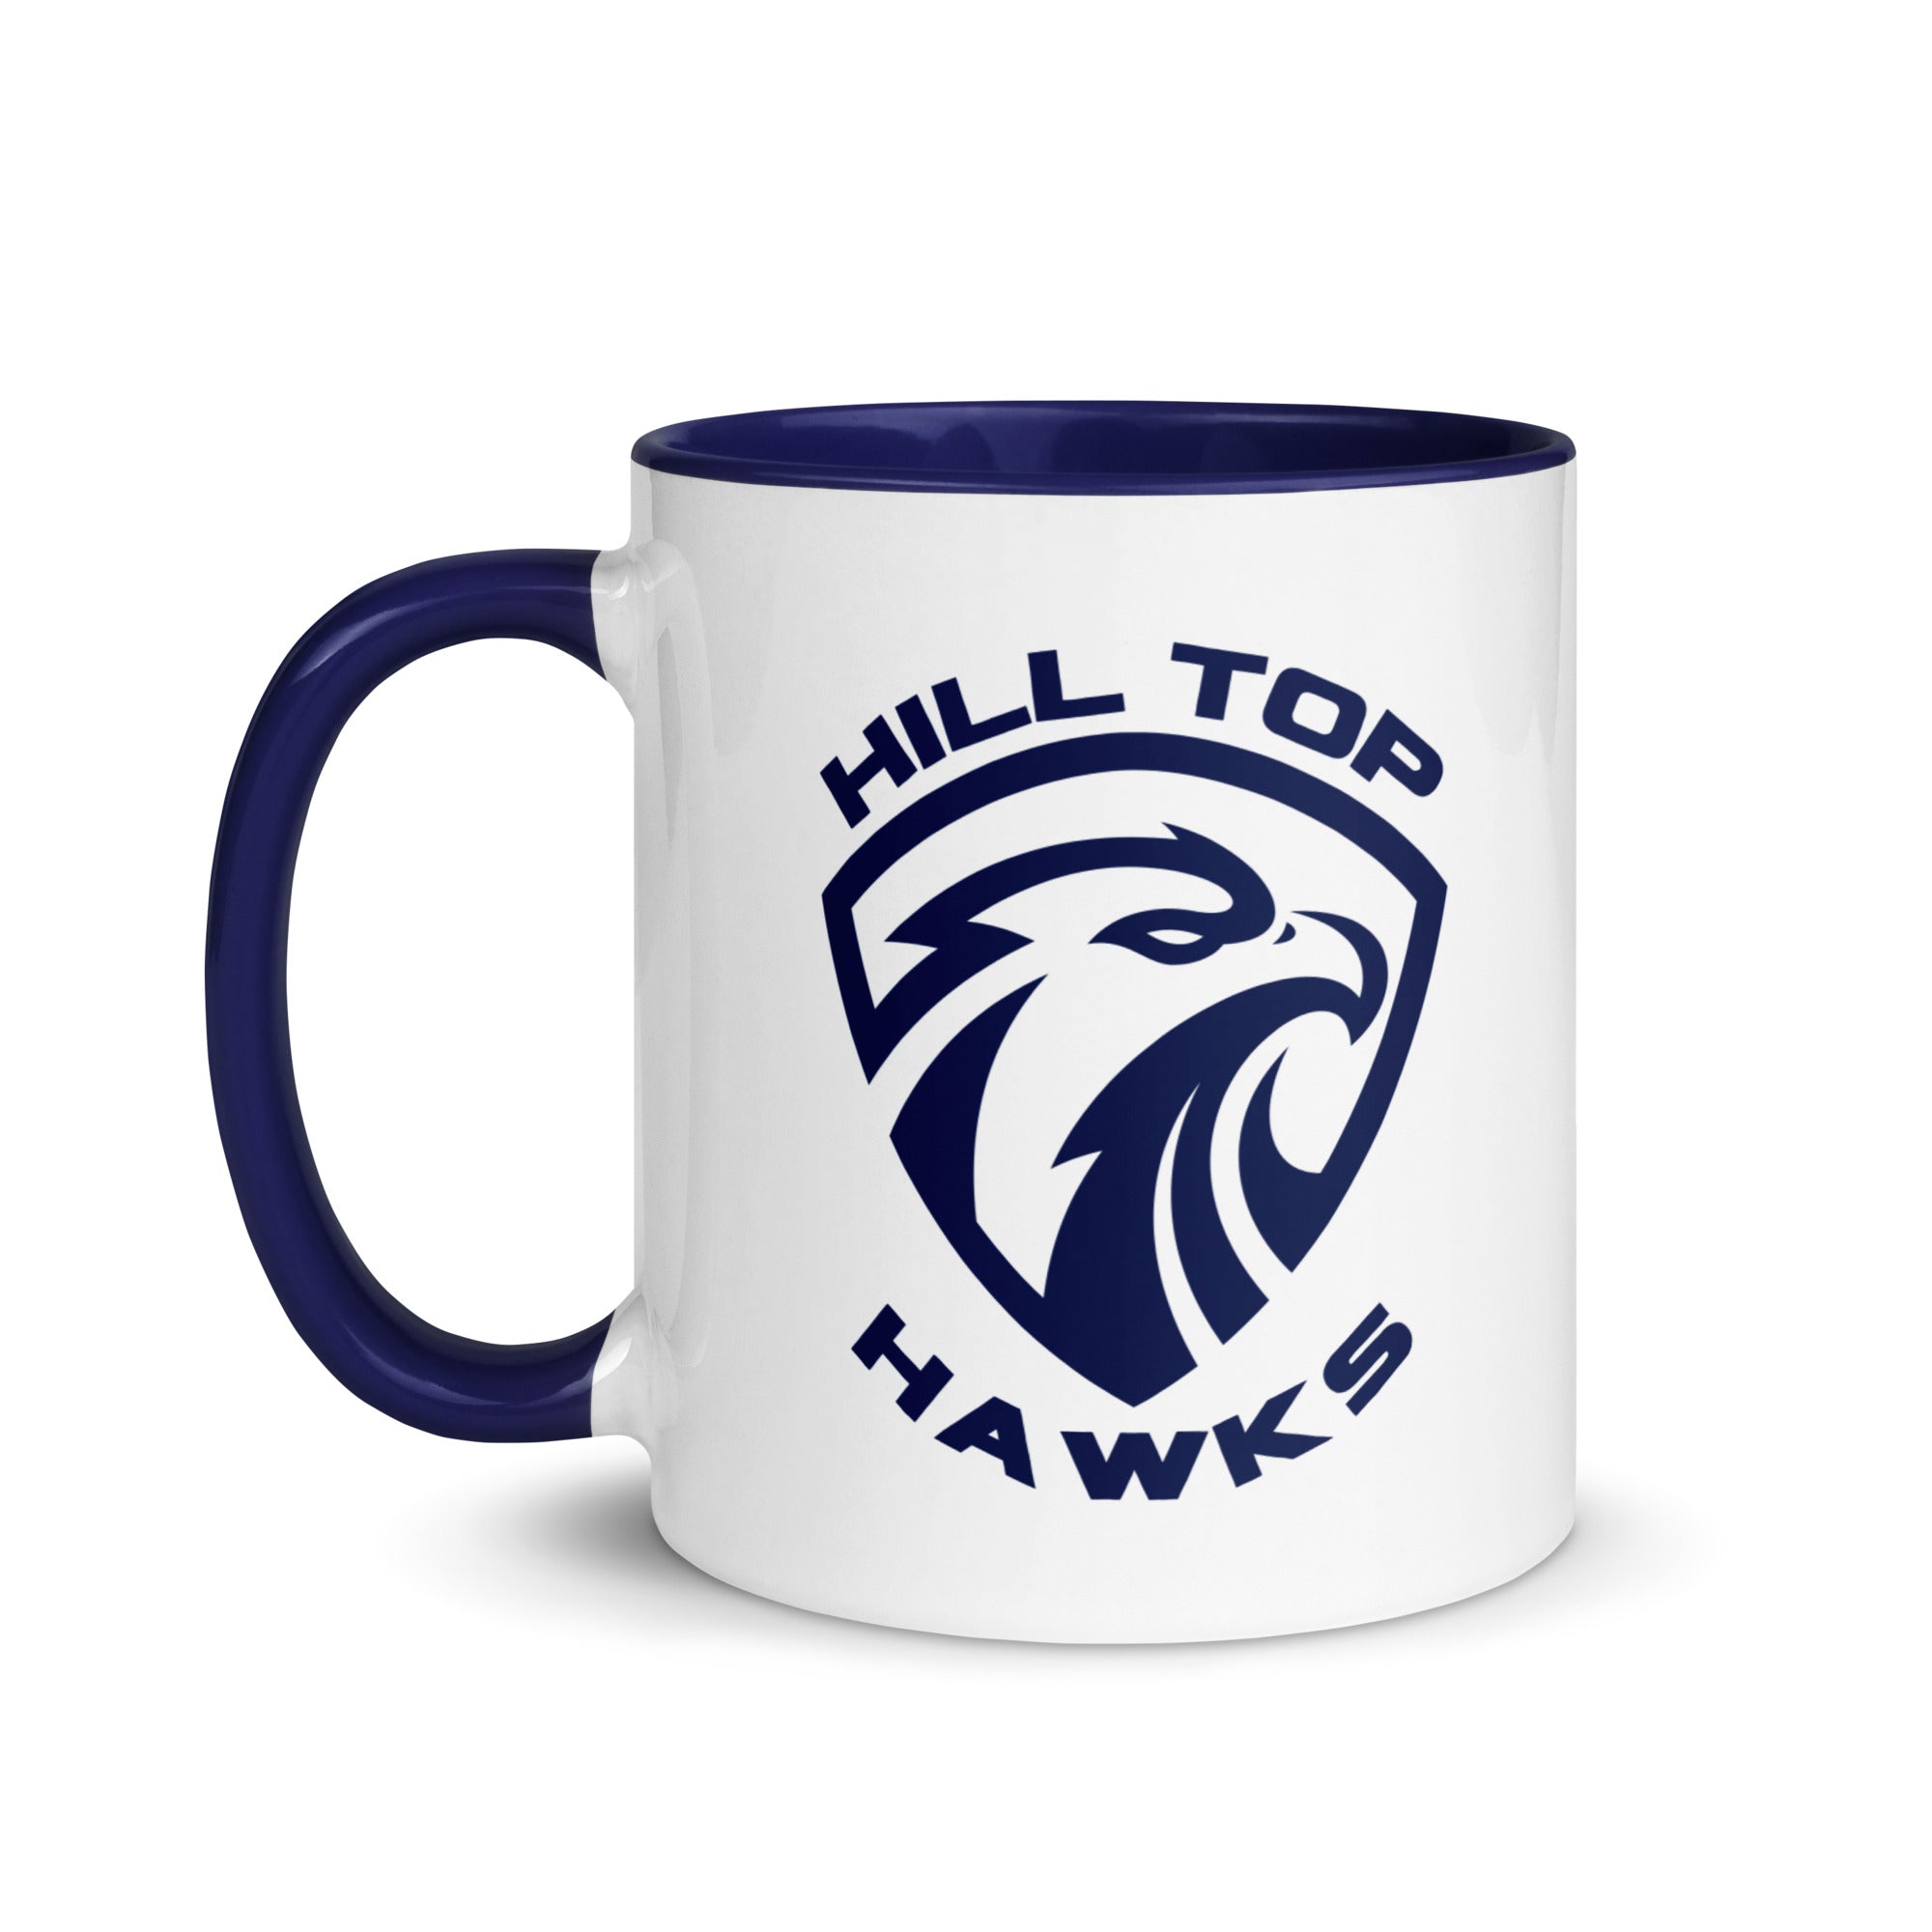 Hill Top Coffee Mug